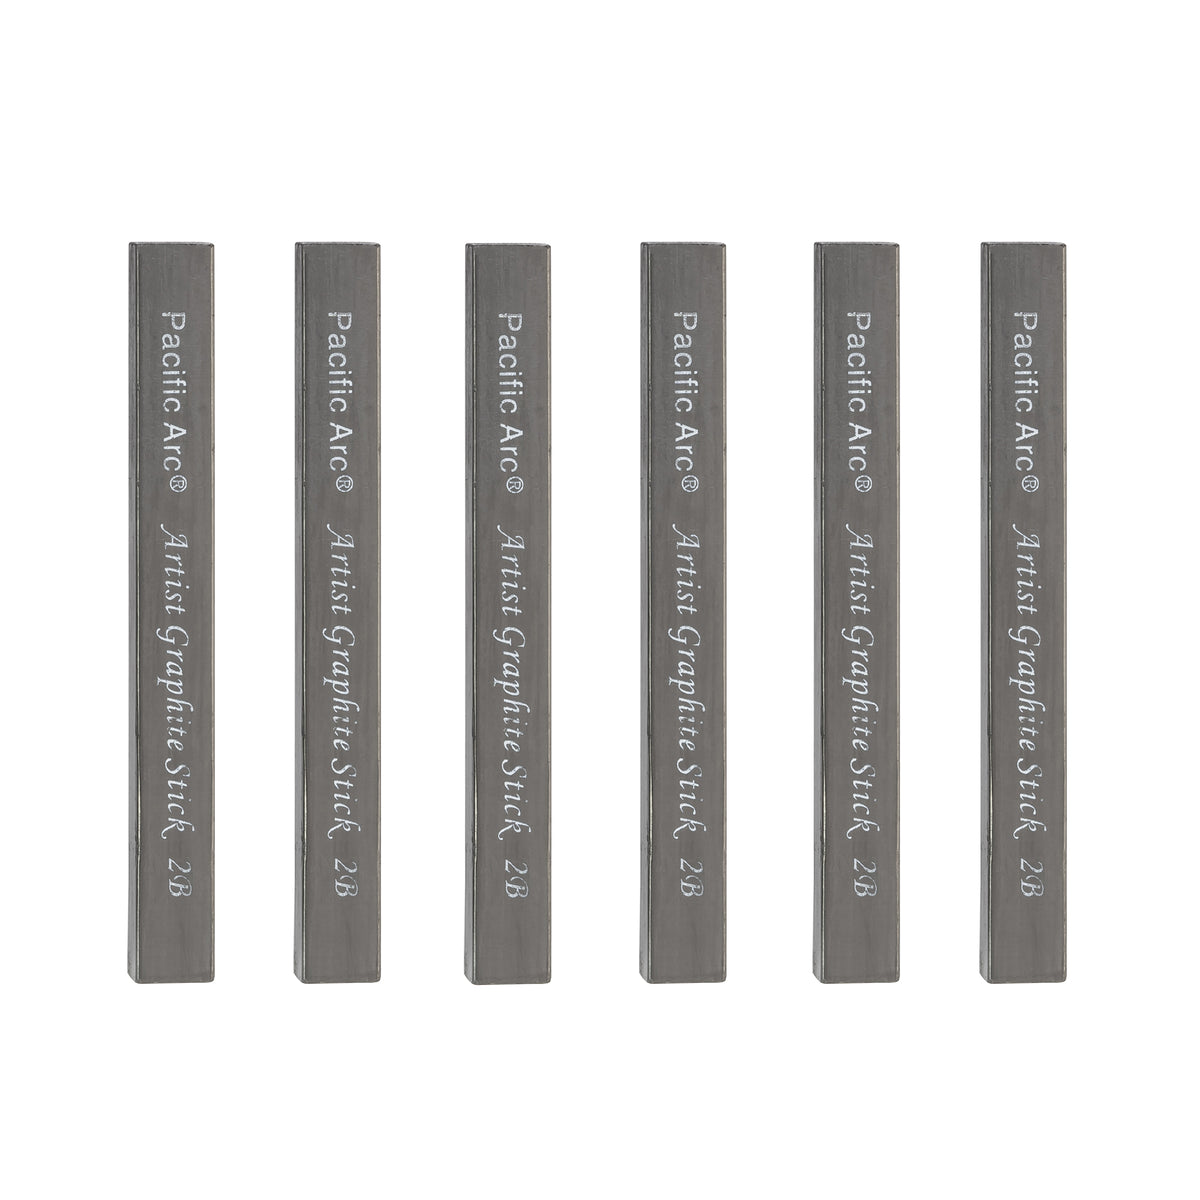 Graphite Stick: open stock, artists - 6/box